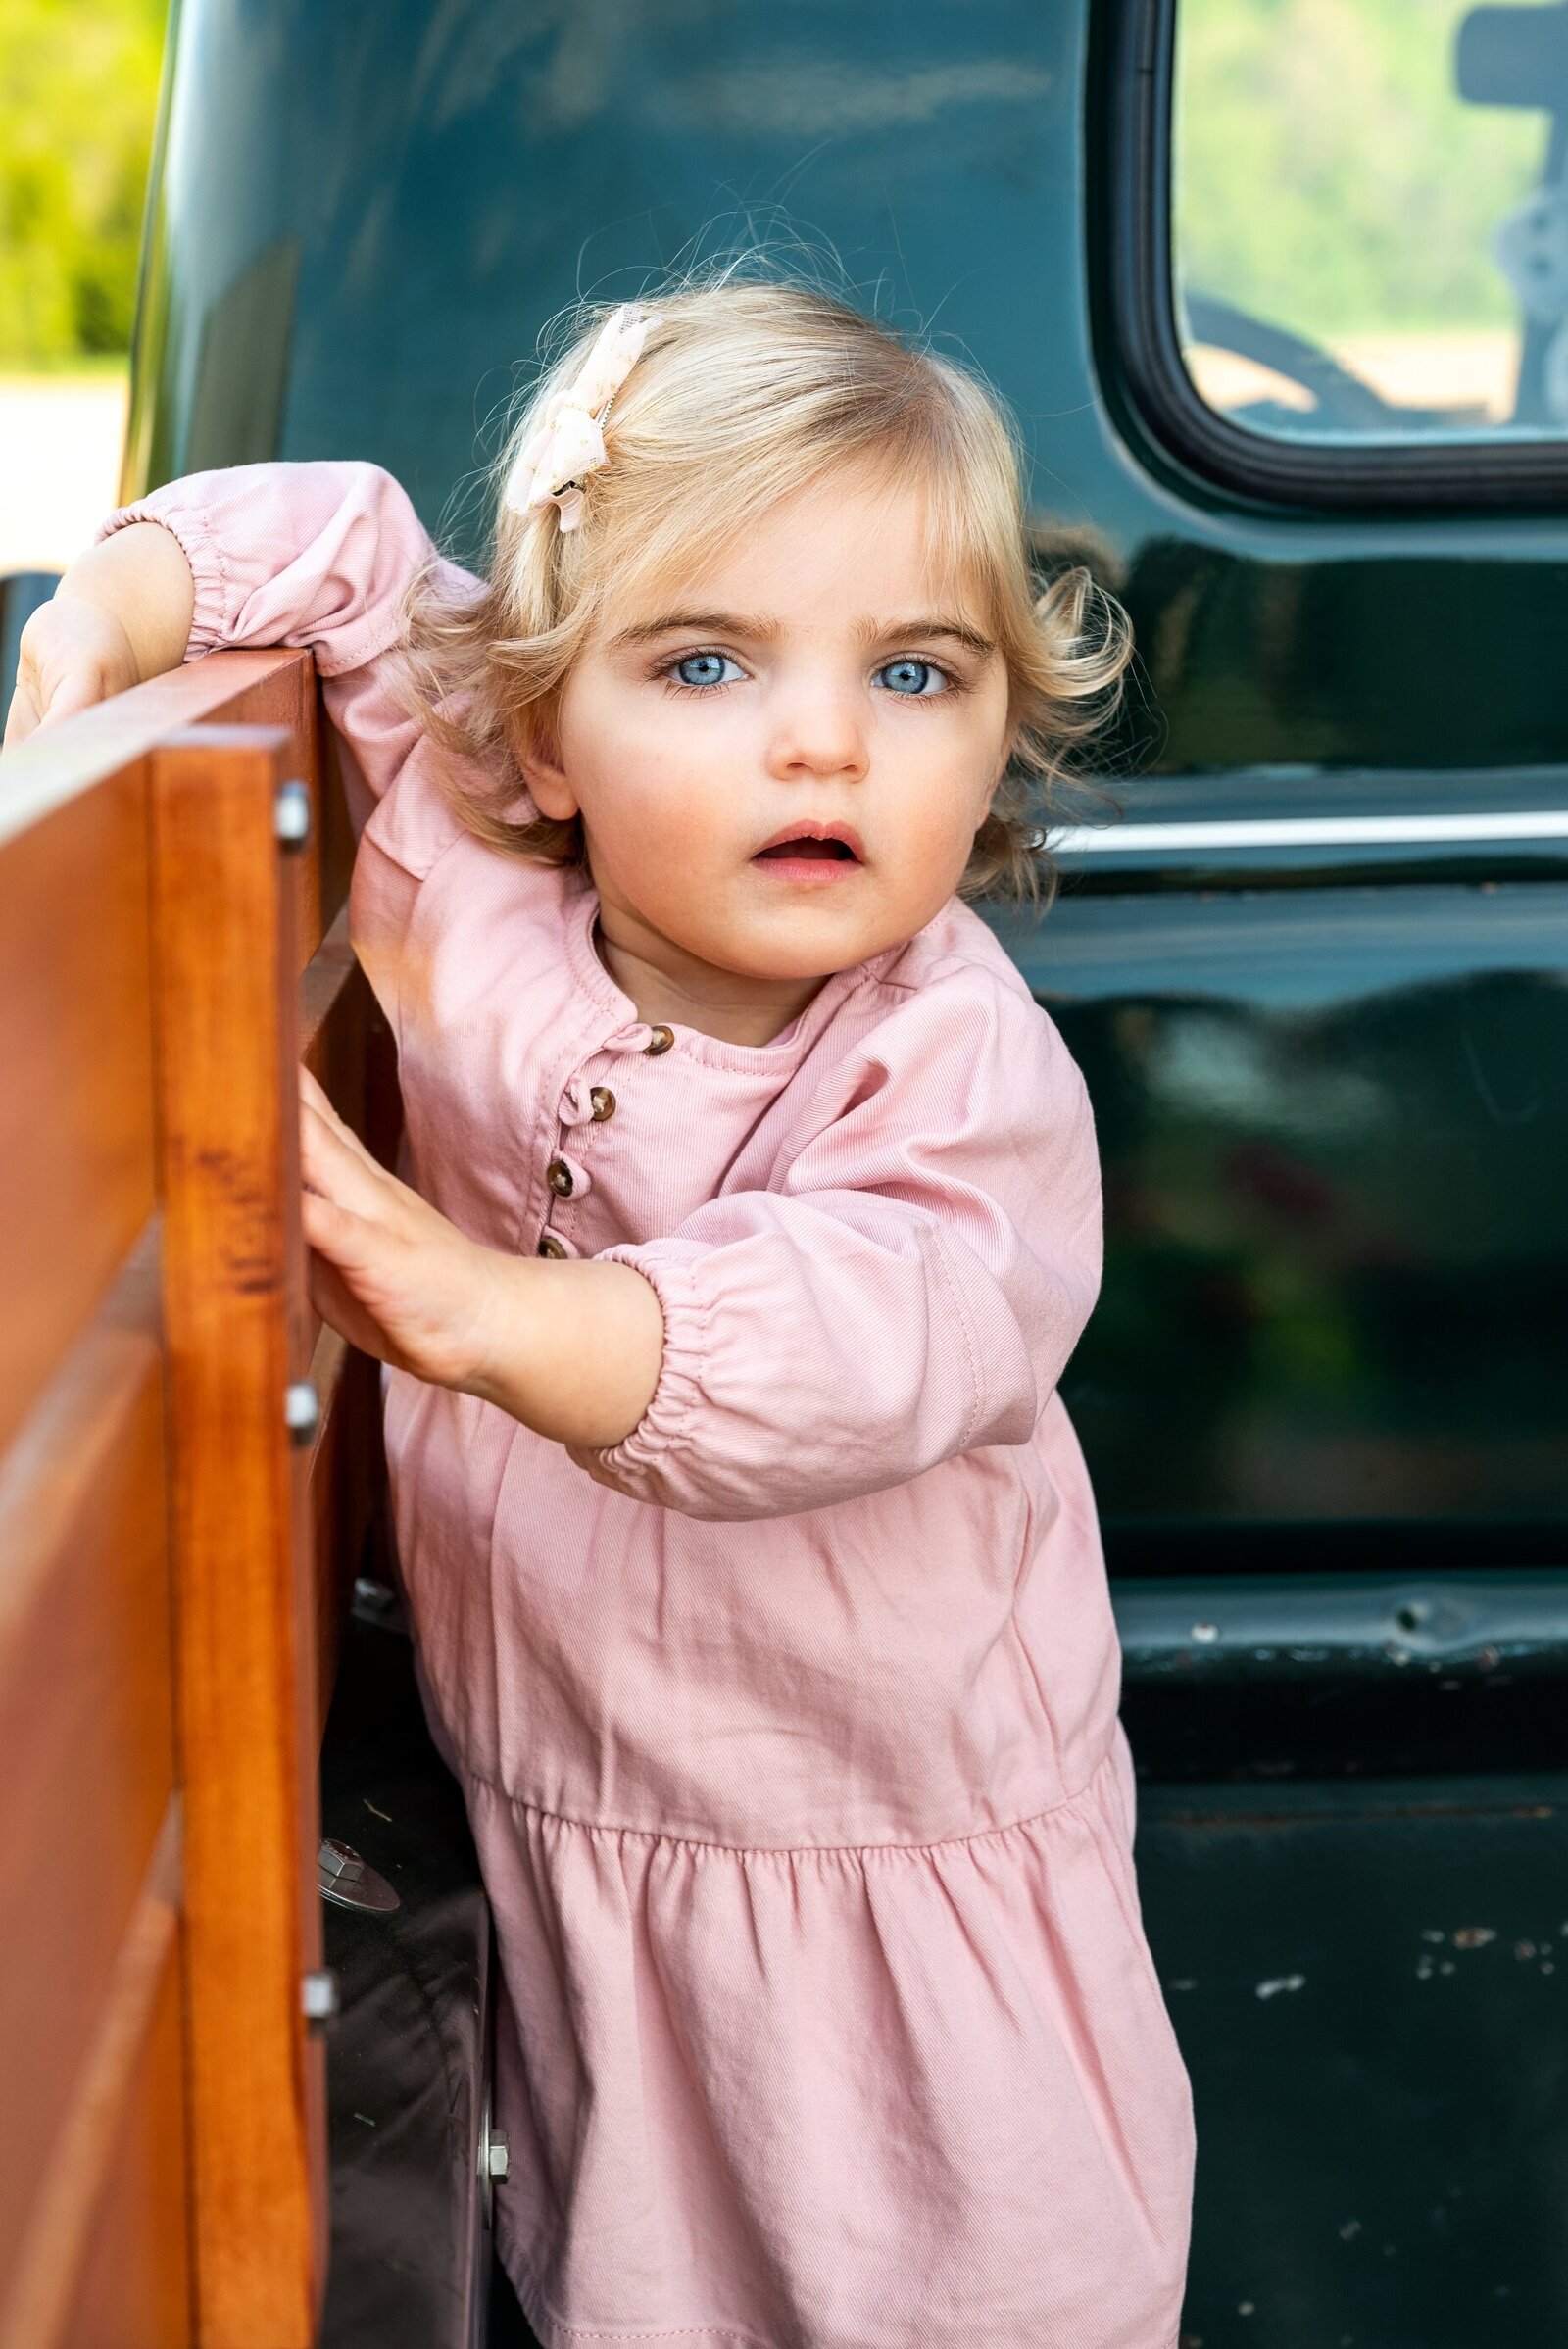 Toddler in back of truck